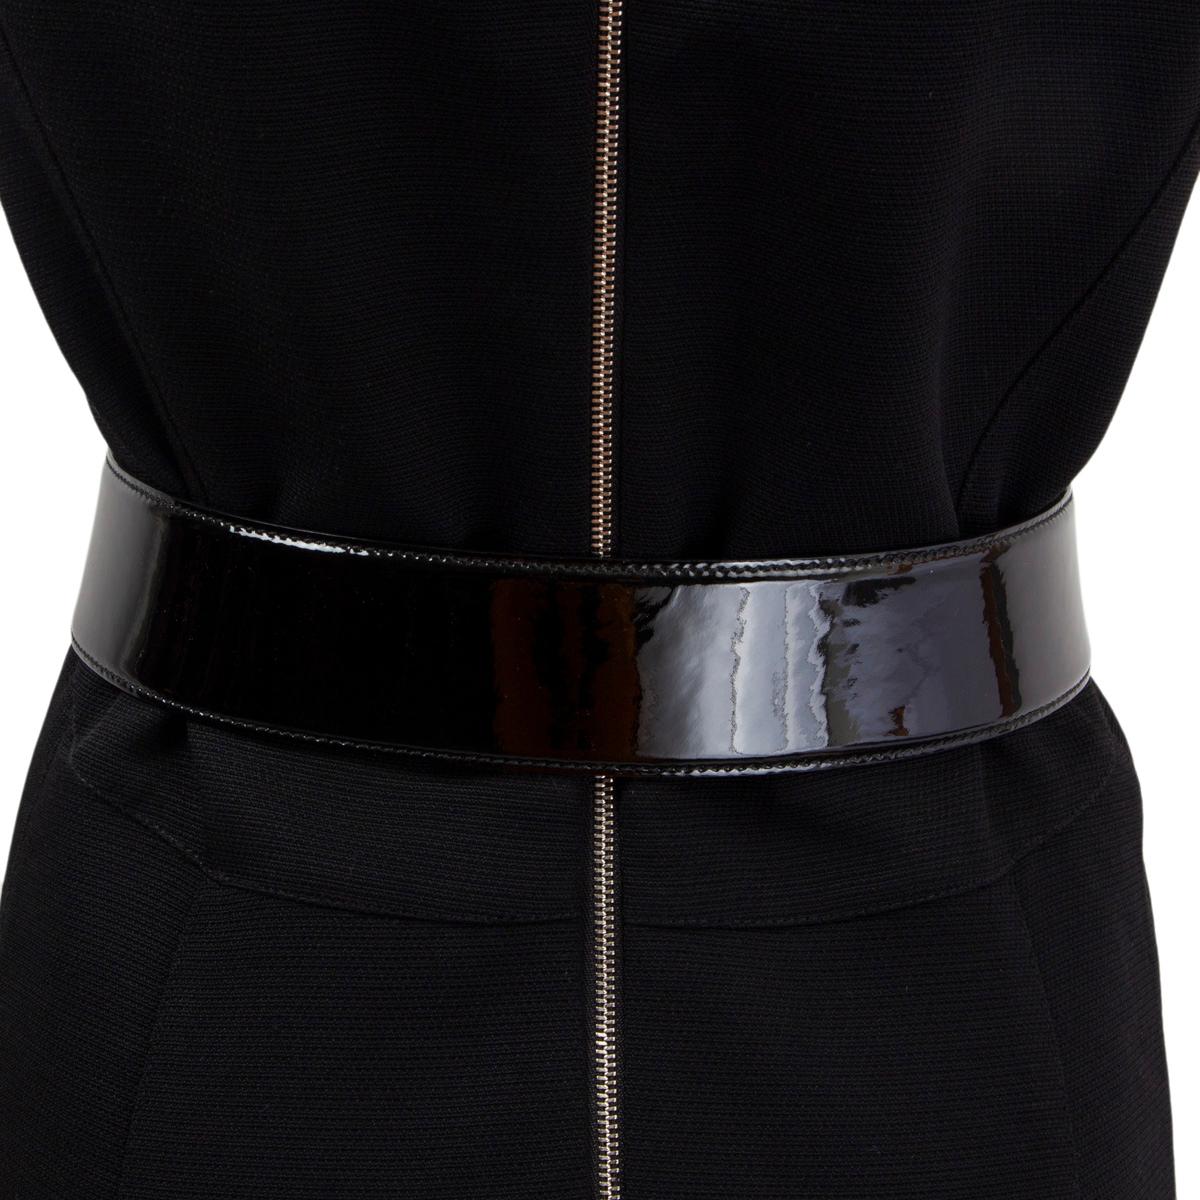 Women's MIU MIU black patent leather WIDE WAIST Belt 70